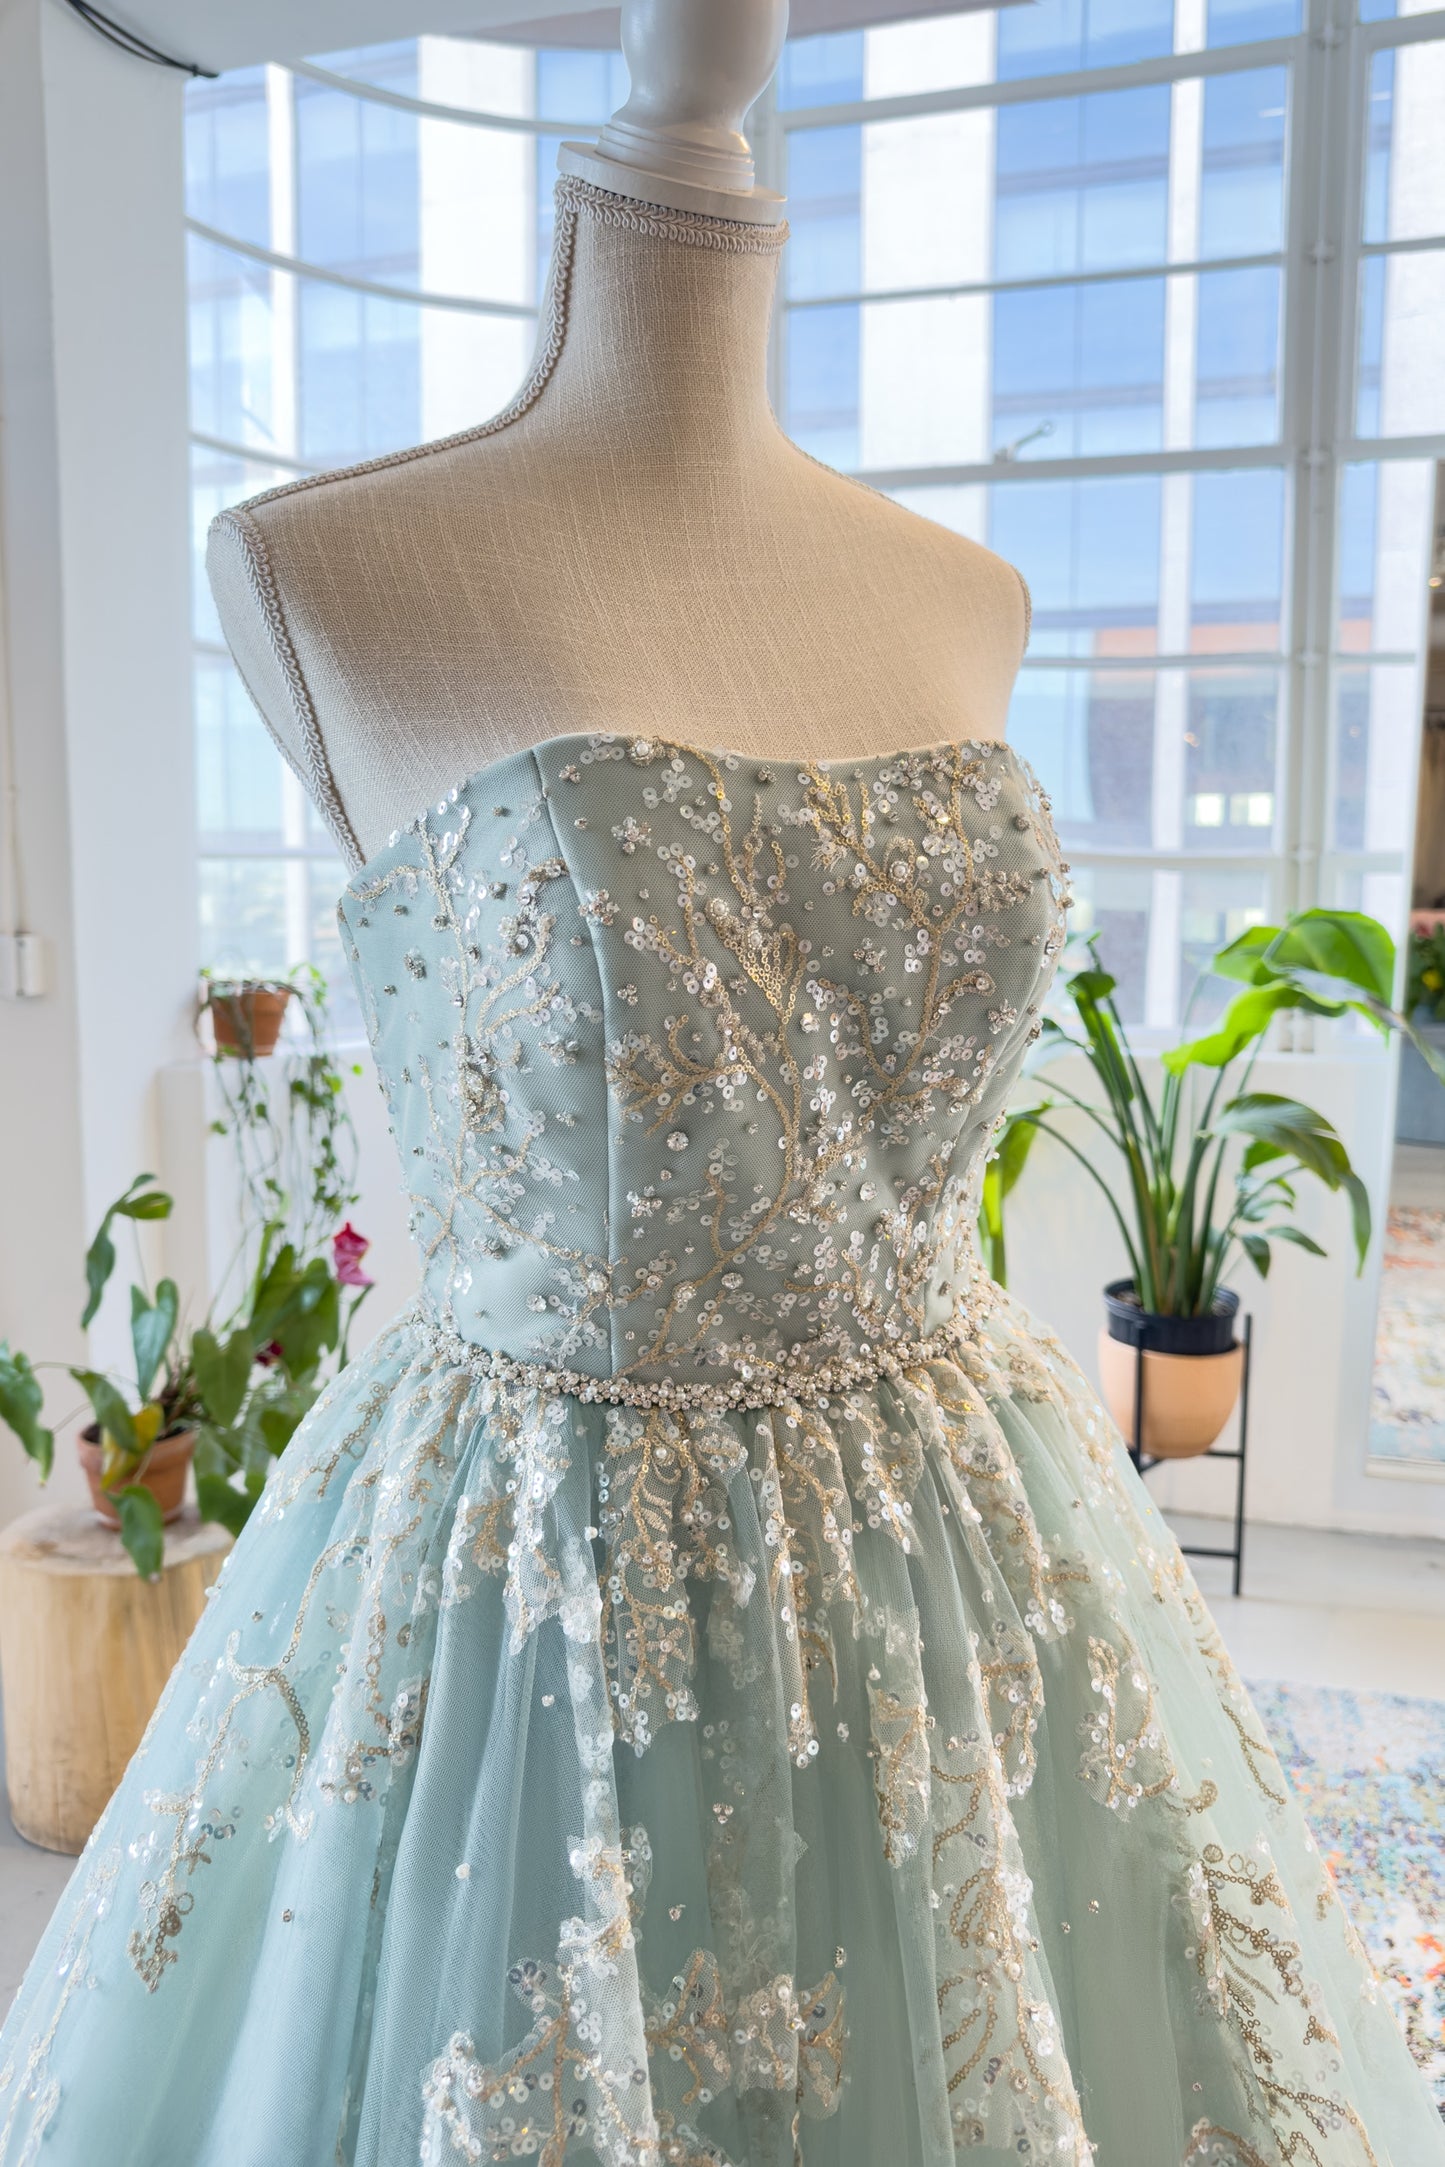 Princess Chapel Train Lace Tulle Wedding Dress CW3070